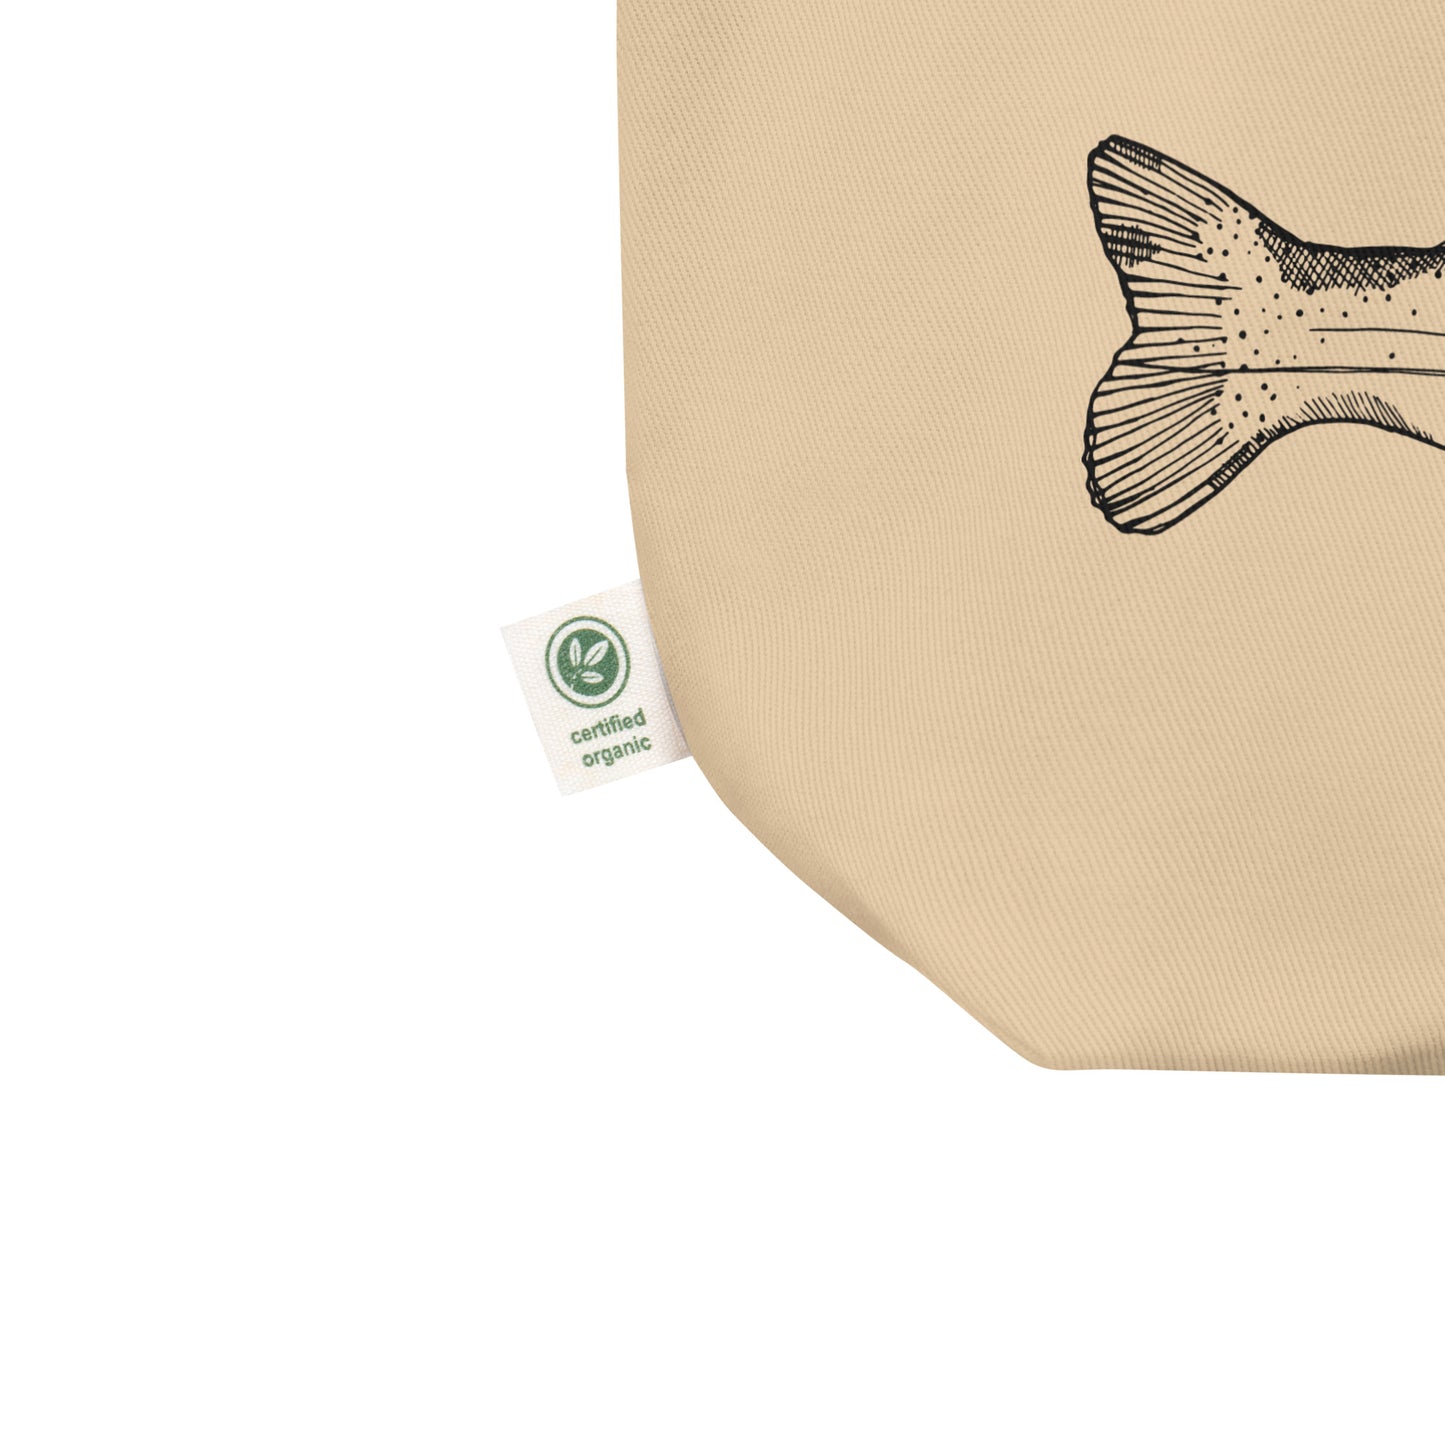 Trout Eco-Friendly Tote Bag